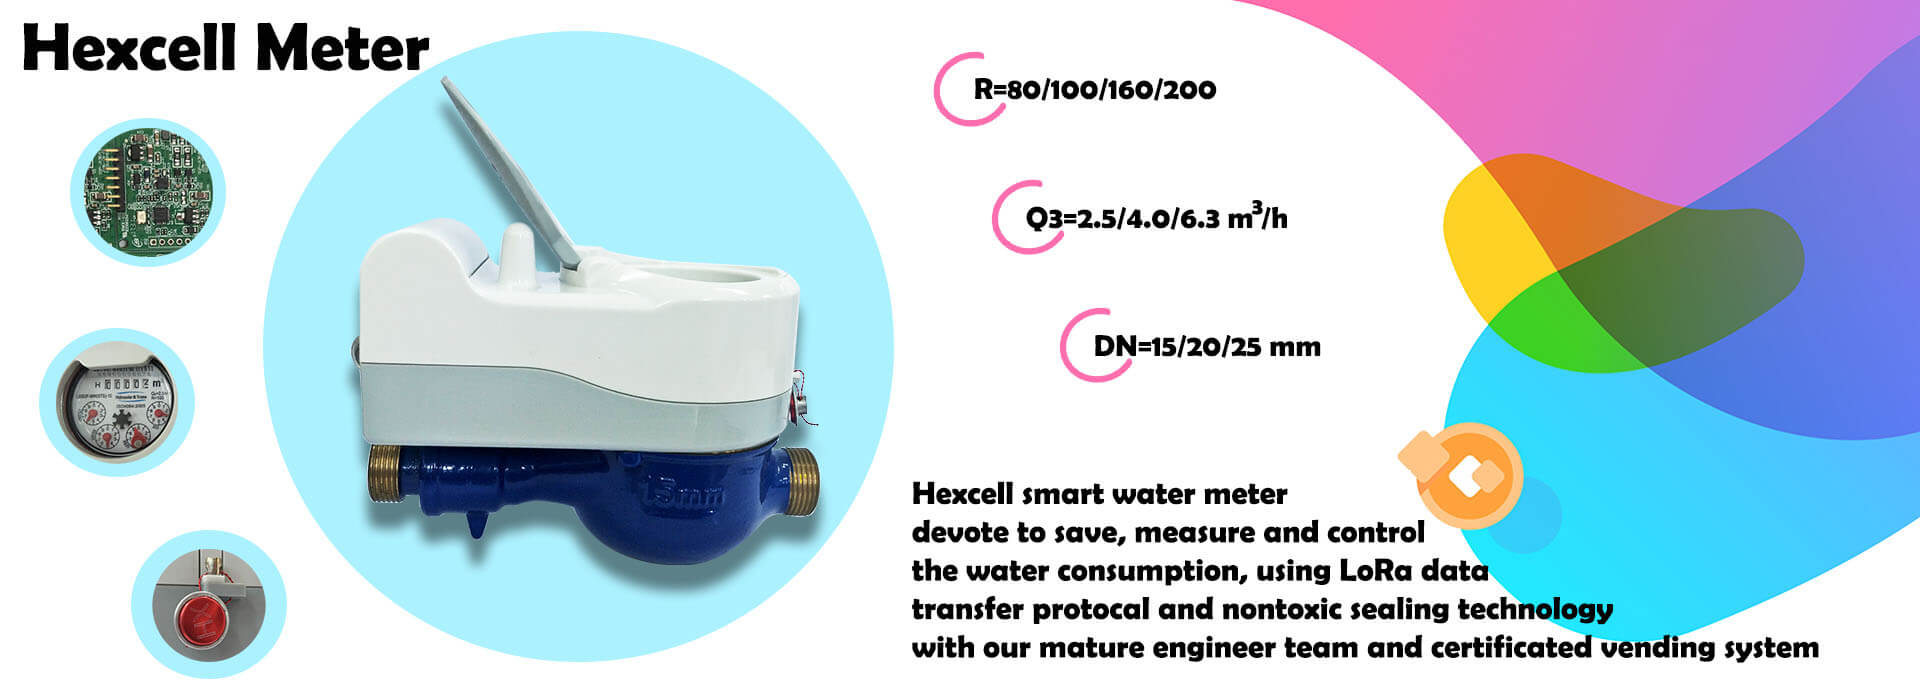 Hexcell Water Meter